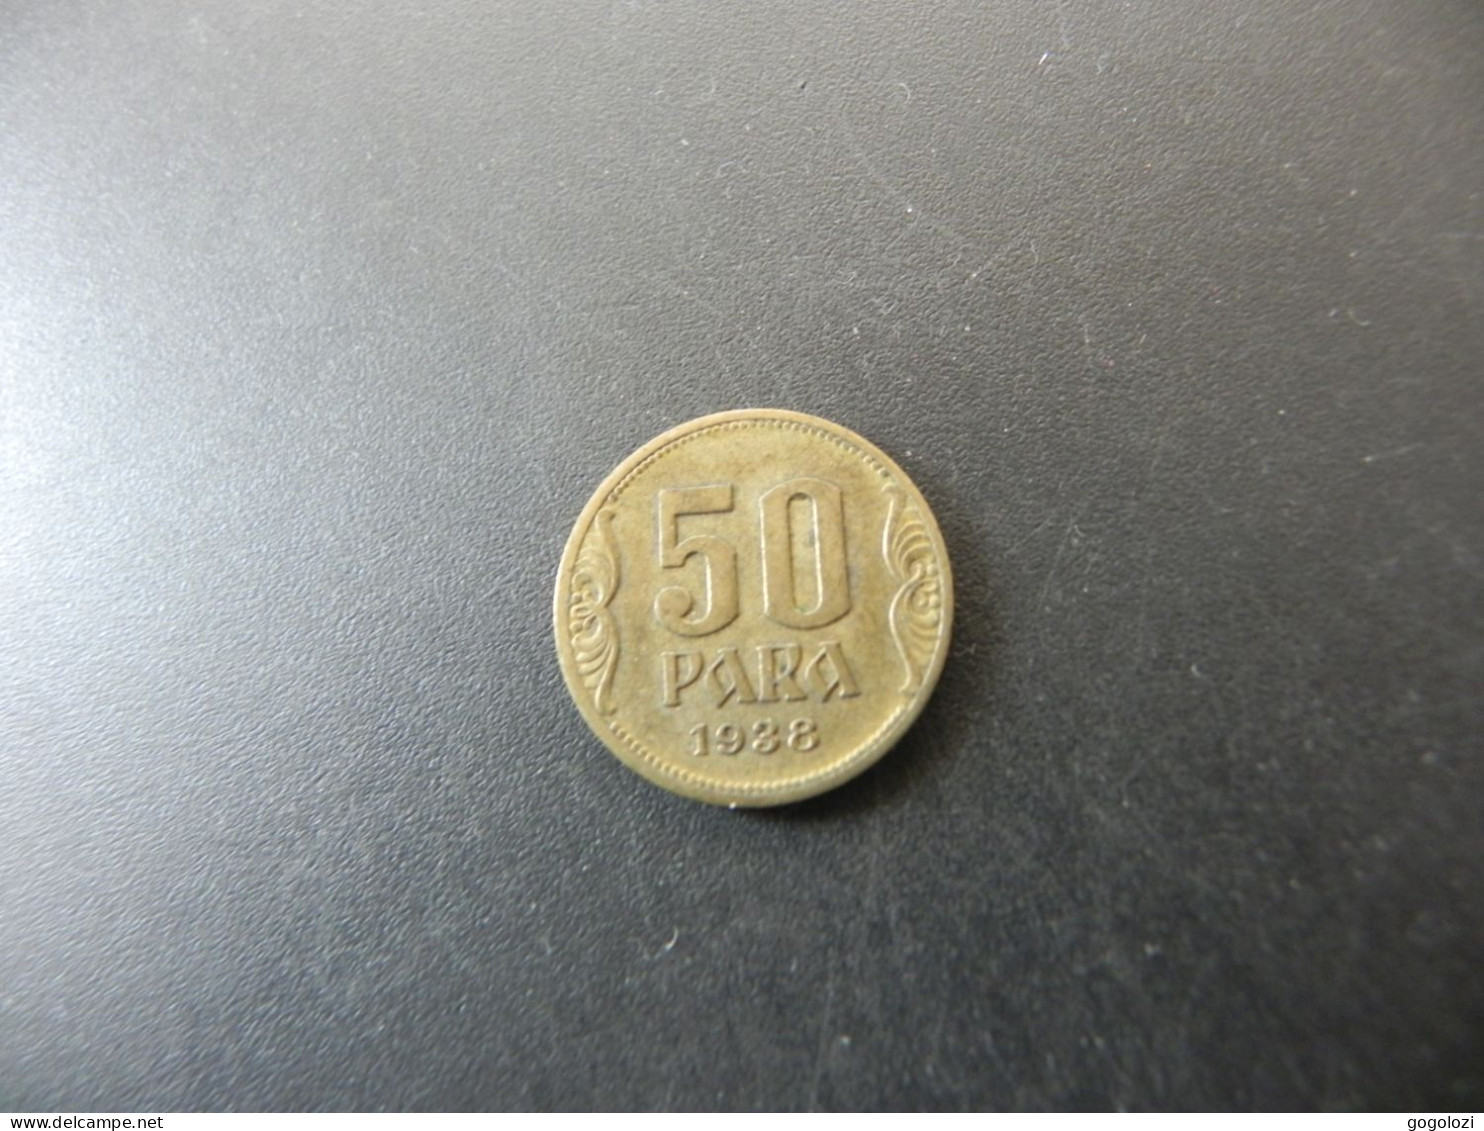 Serbia 50 Para 1938 - Serbie